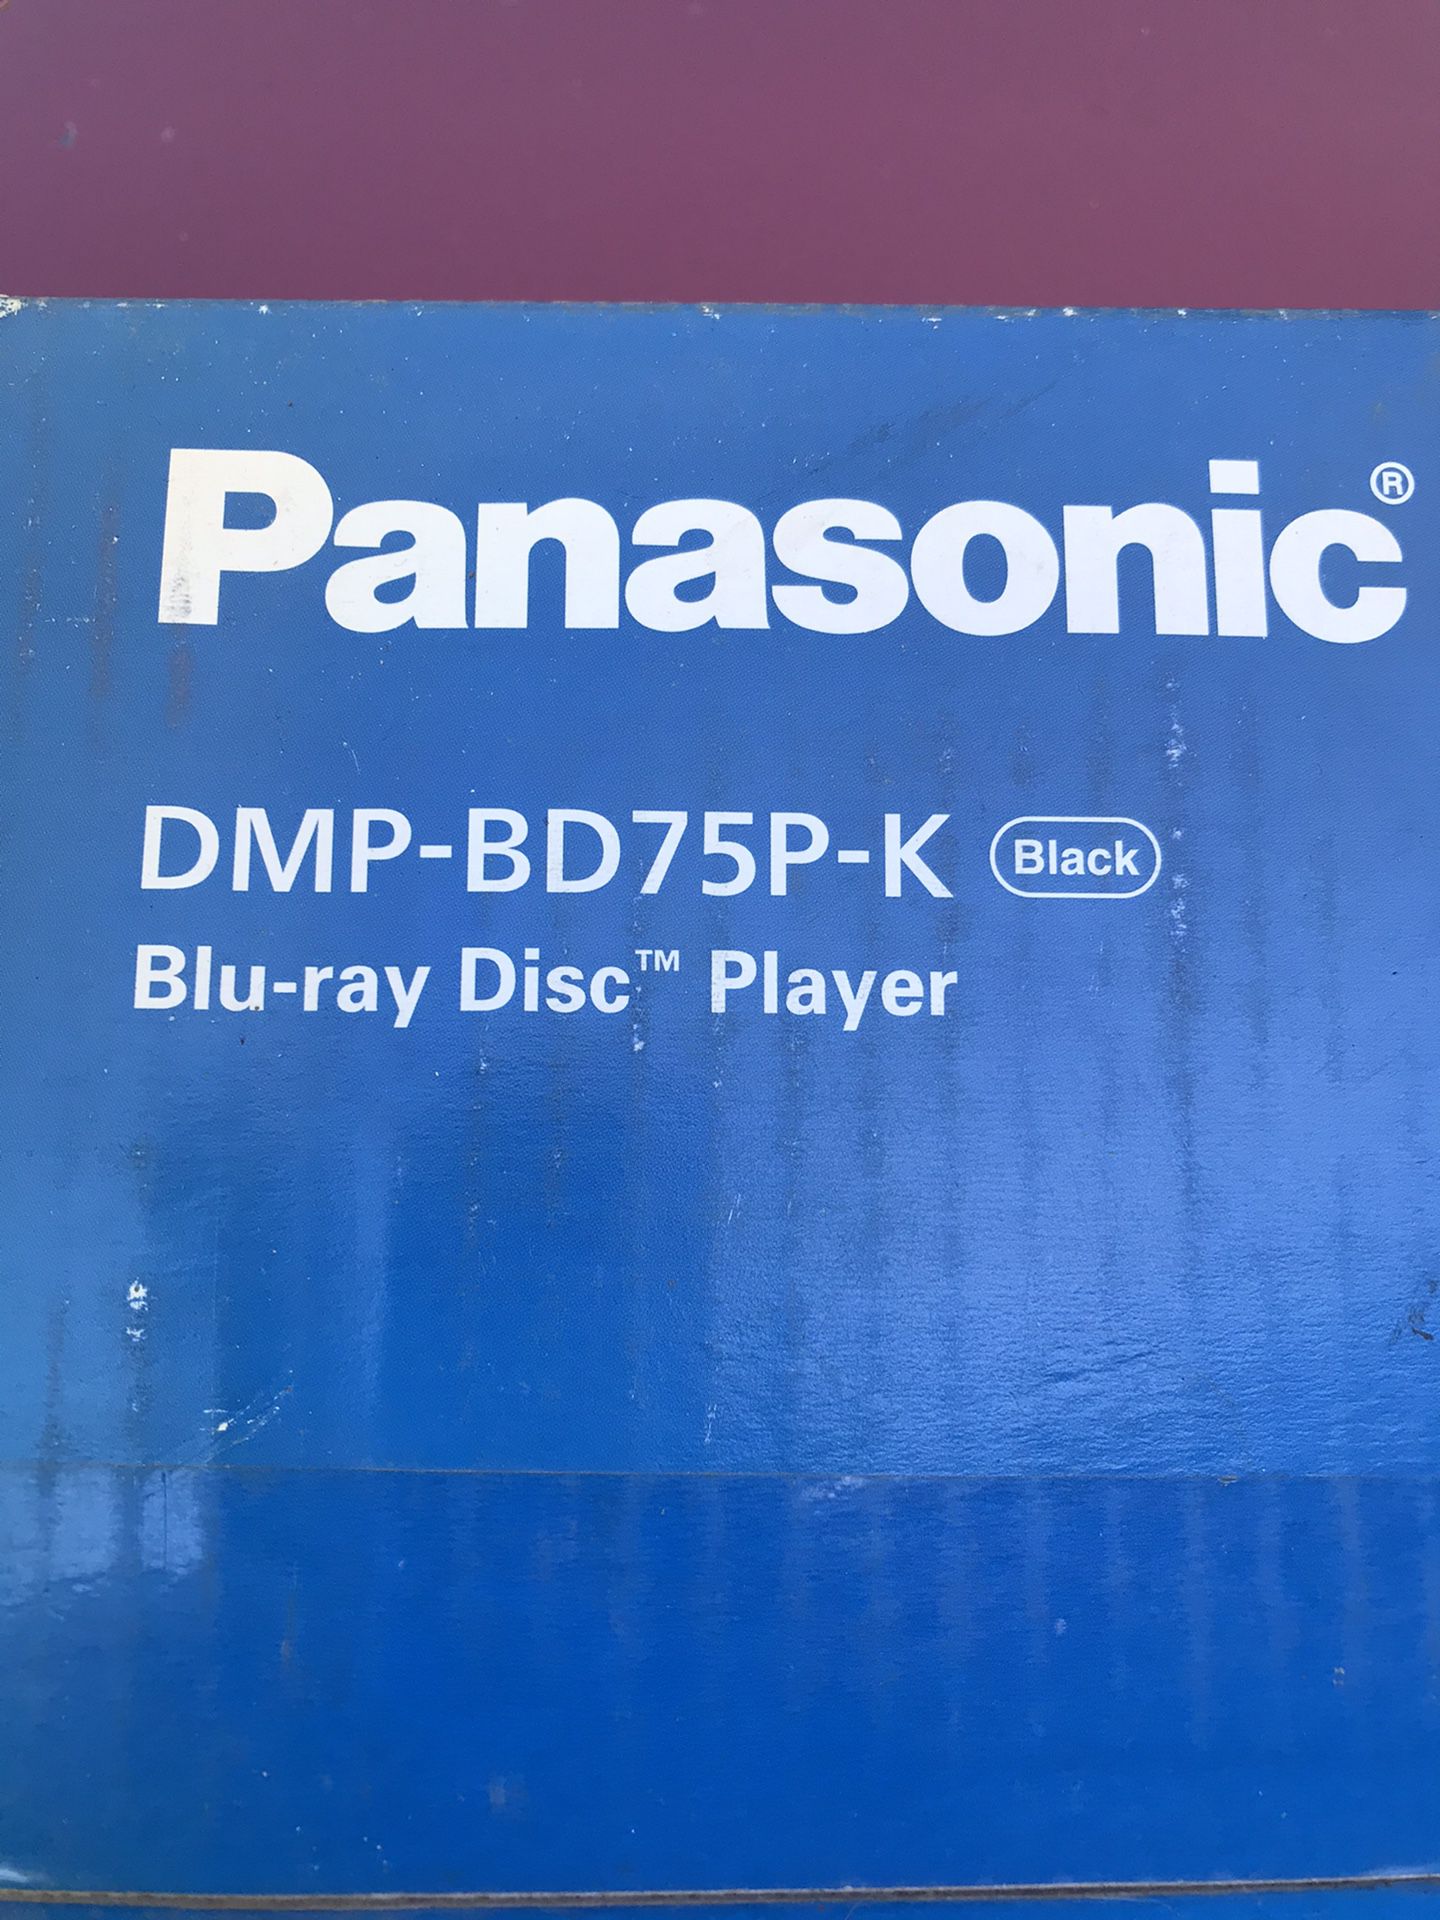 Blue ray DVD player